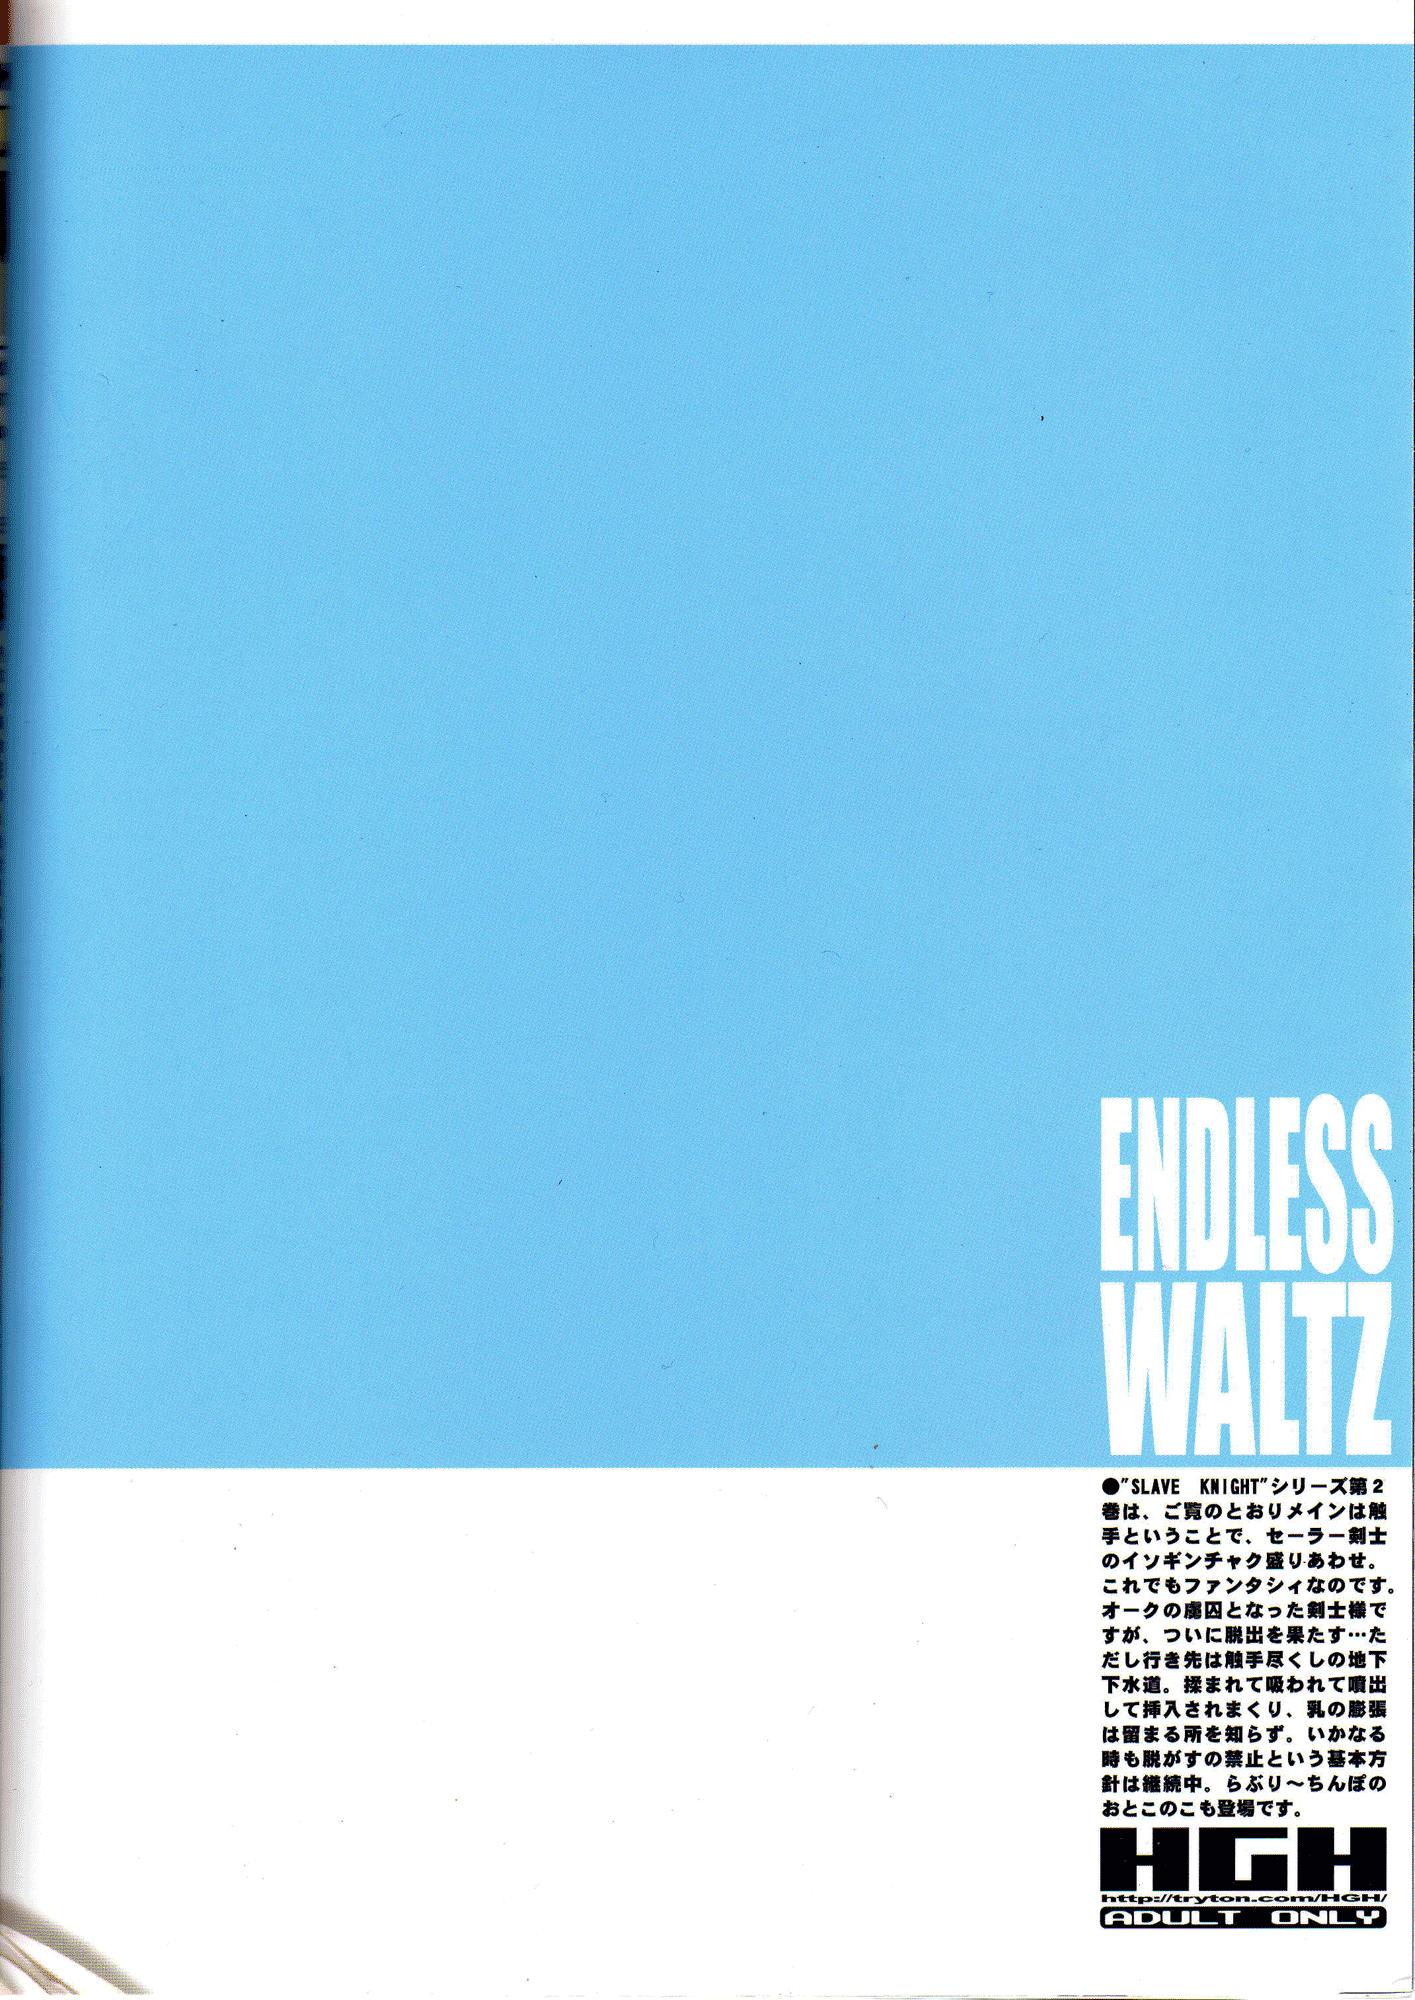 Slave Knight 02 - Endless Waltz 24